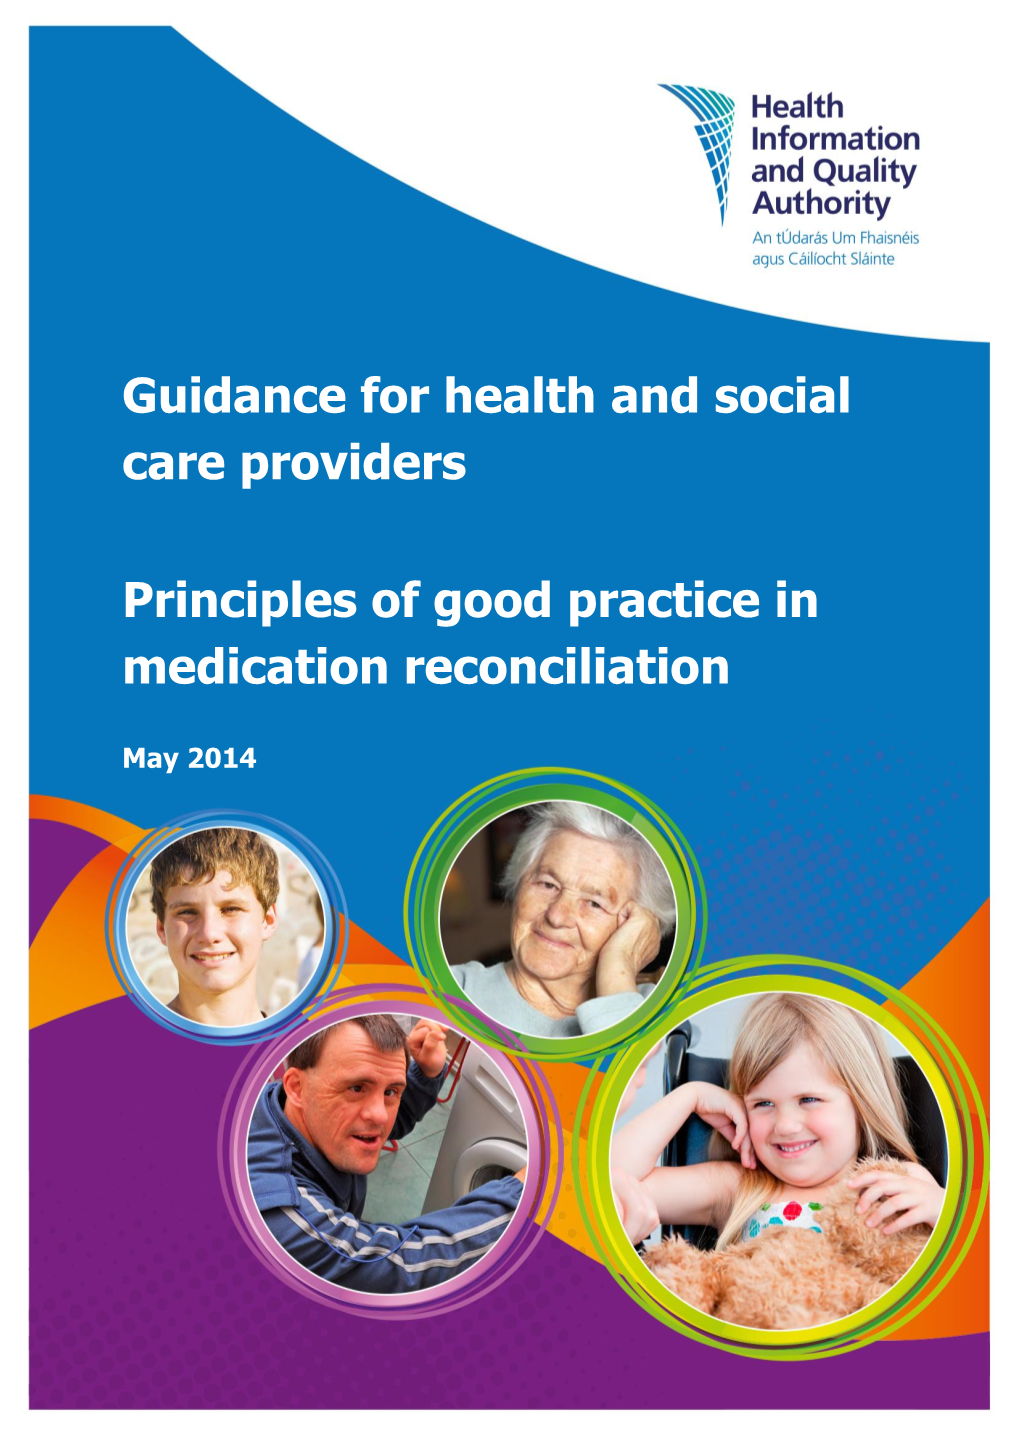 Principles of Good Practice in Medication Reconciliation